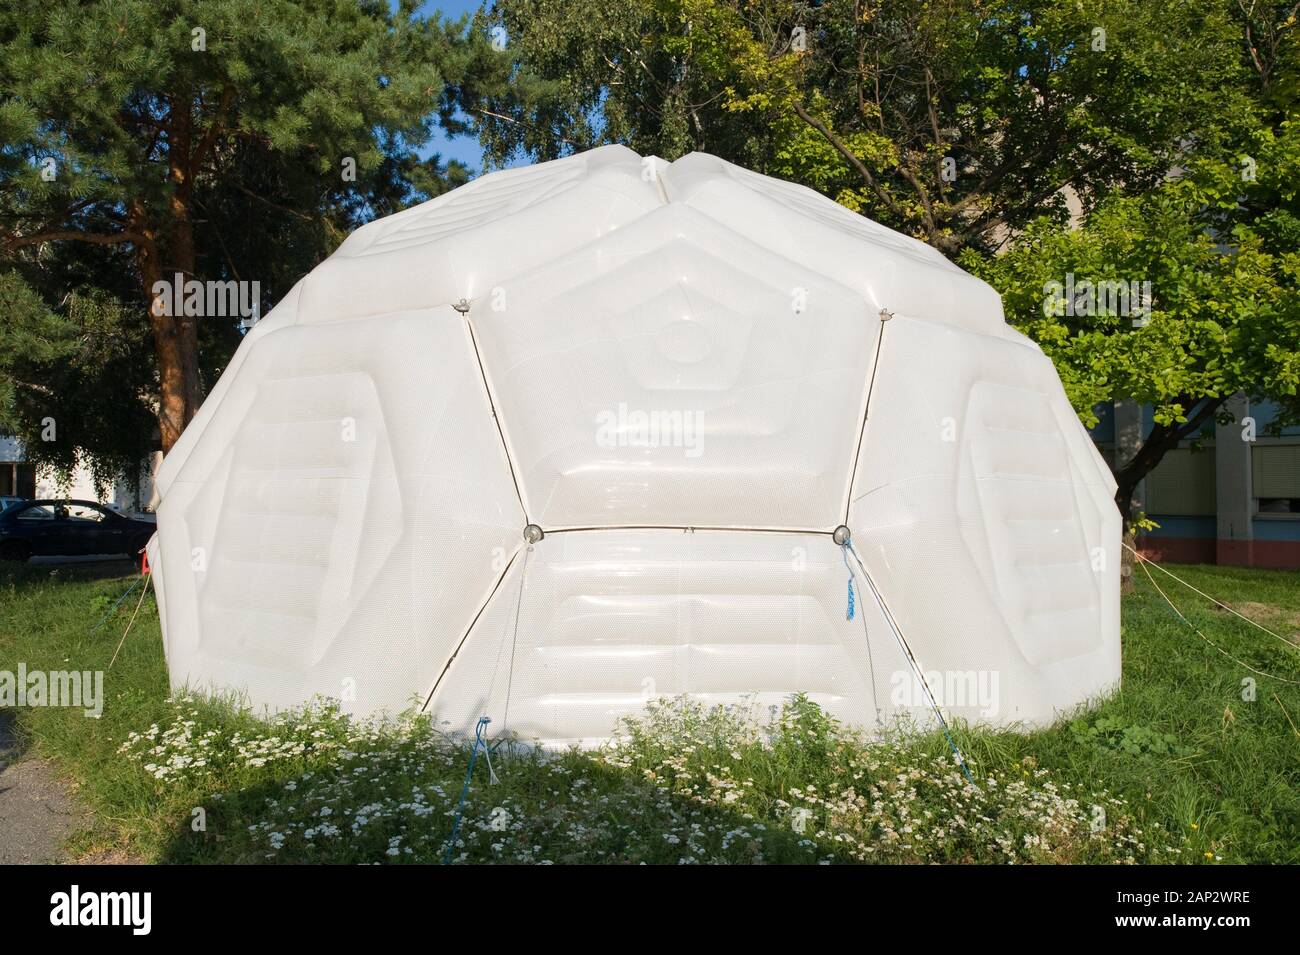 Aufblasbares Zelt - Inflatable Tent Stock Photo - Alamy